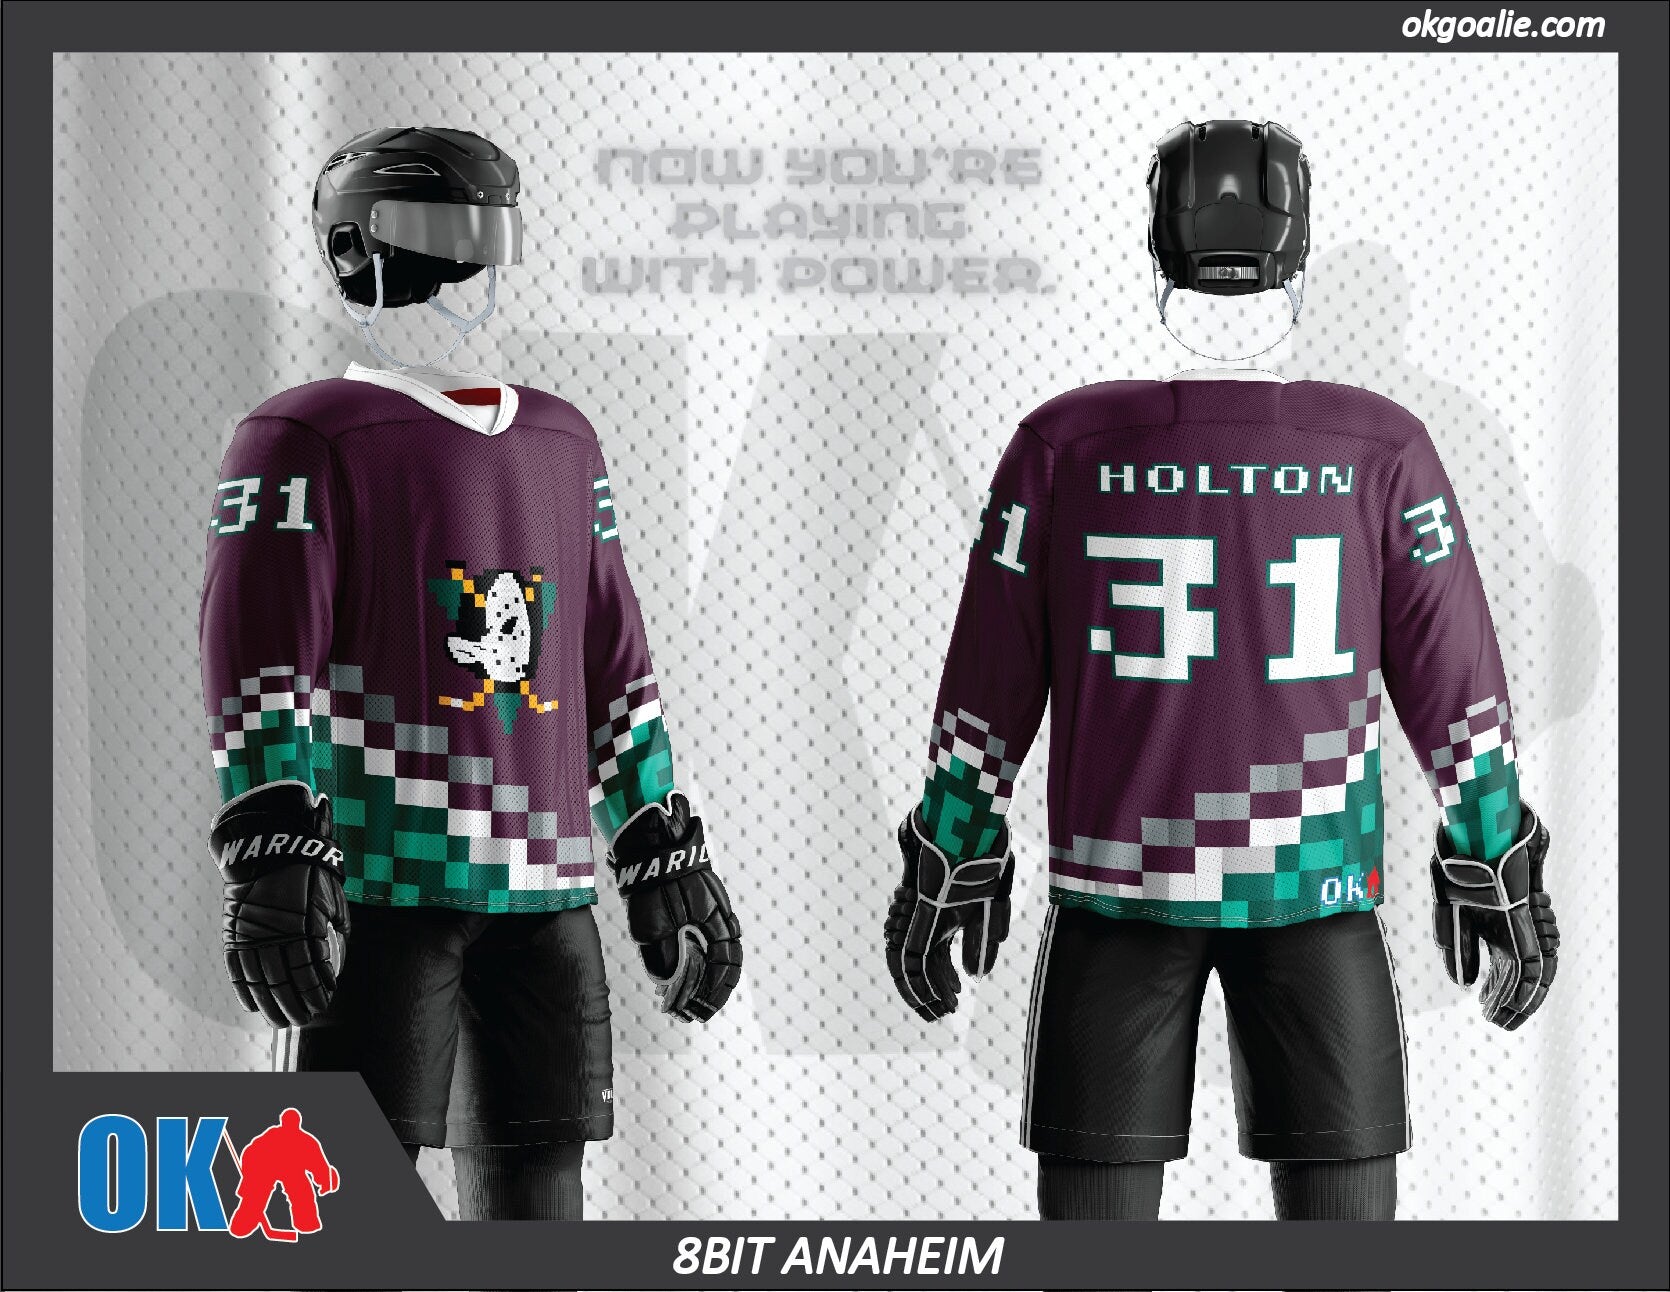 Mighty Ducks Hockey Costume Jersey 